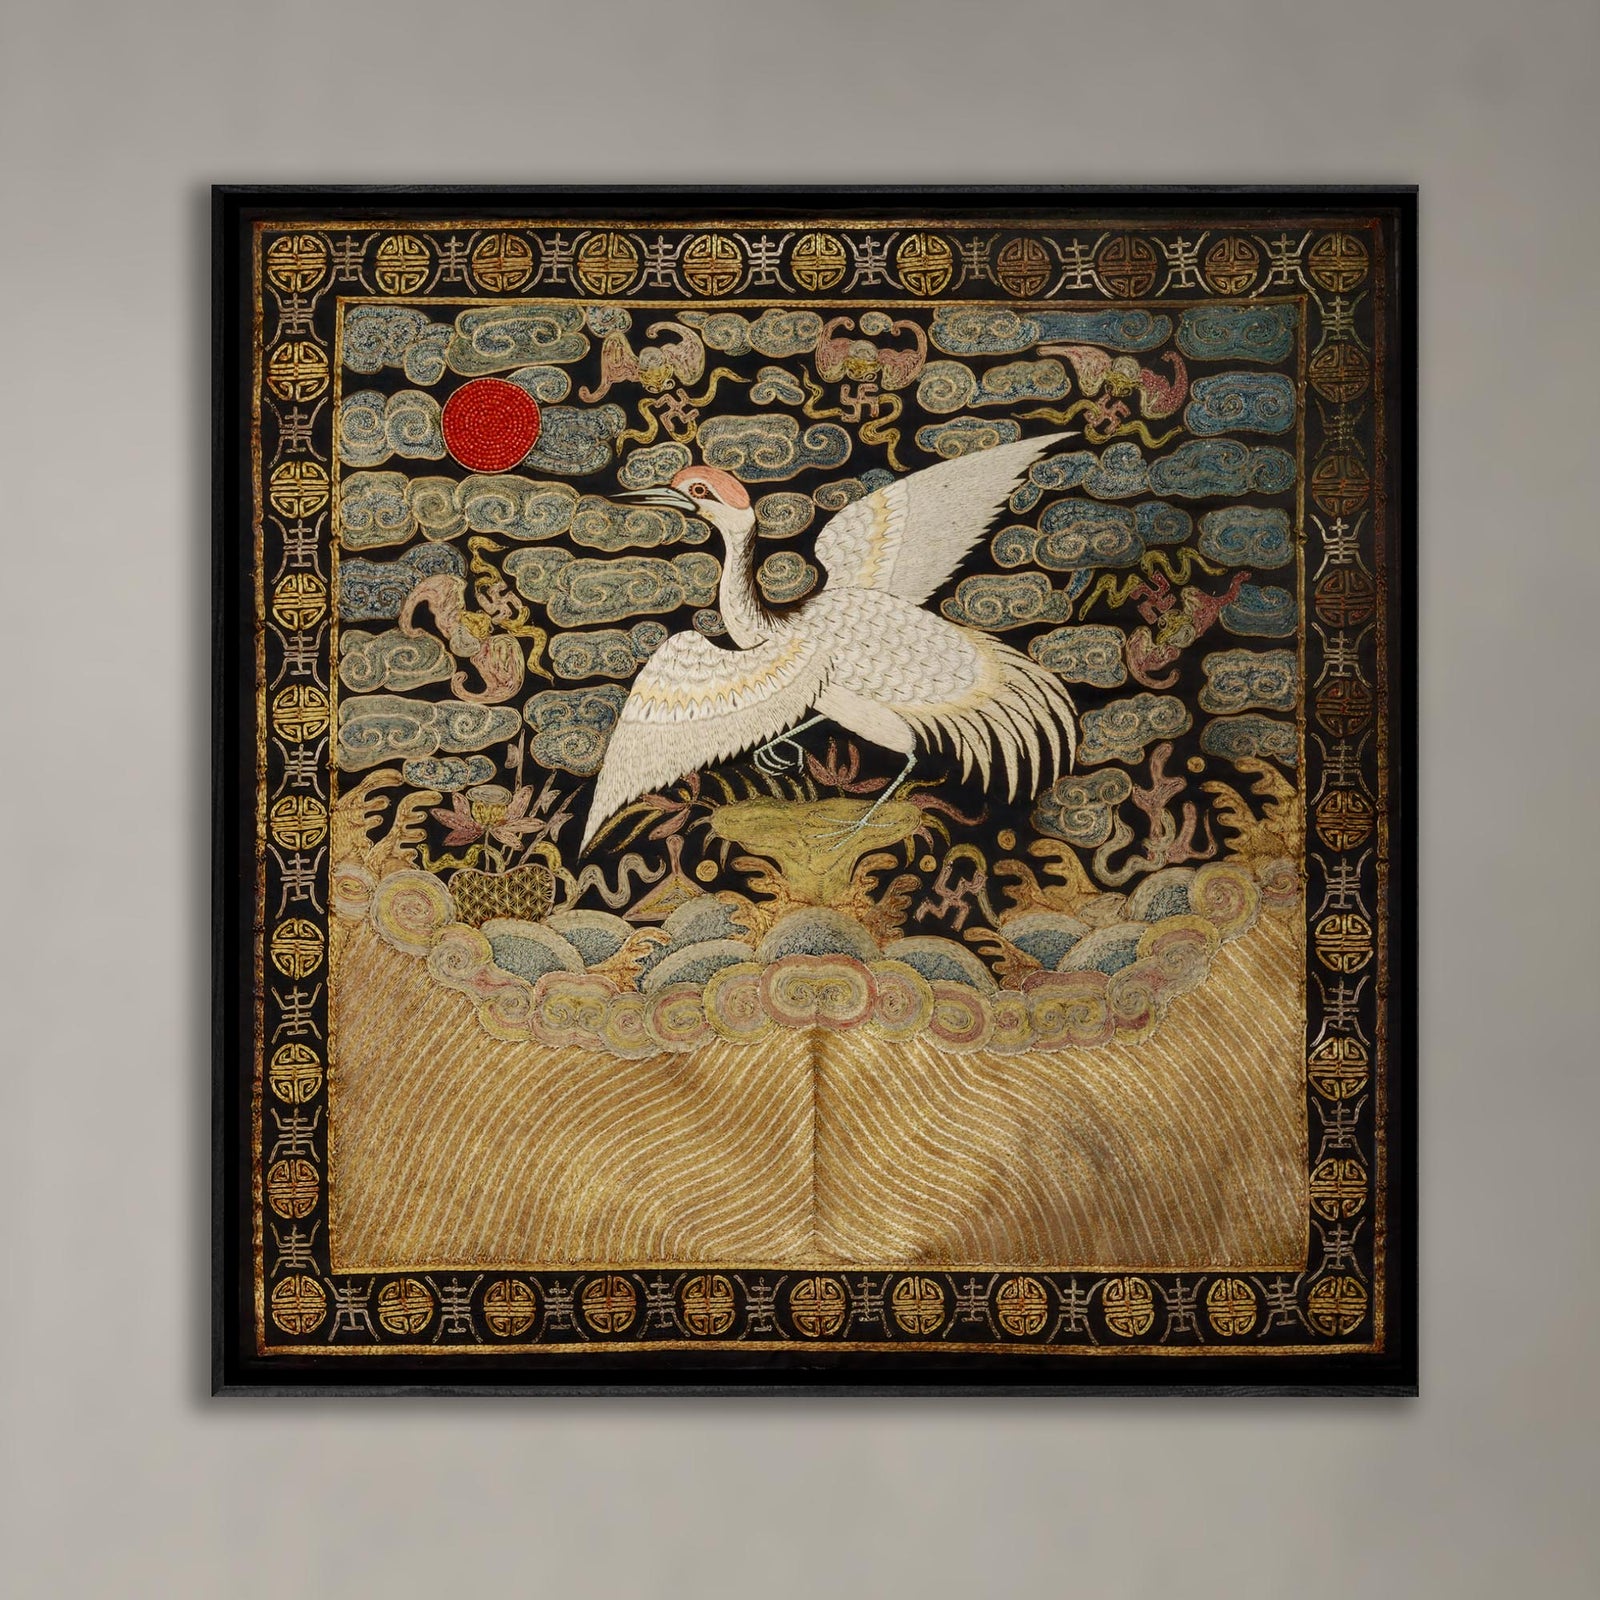 Framed Print 12"x12" / Black Frame Qing Dynasty, Chinese Silk Embroidery Heron Mandarin Bird Square Antique Asian Vintage Framed Art Print